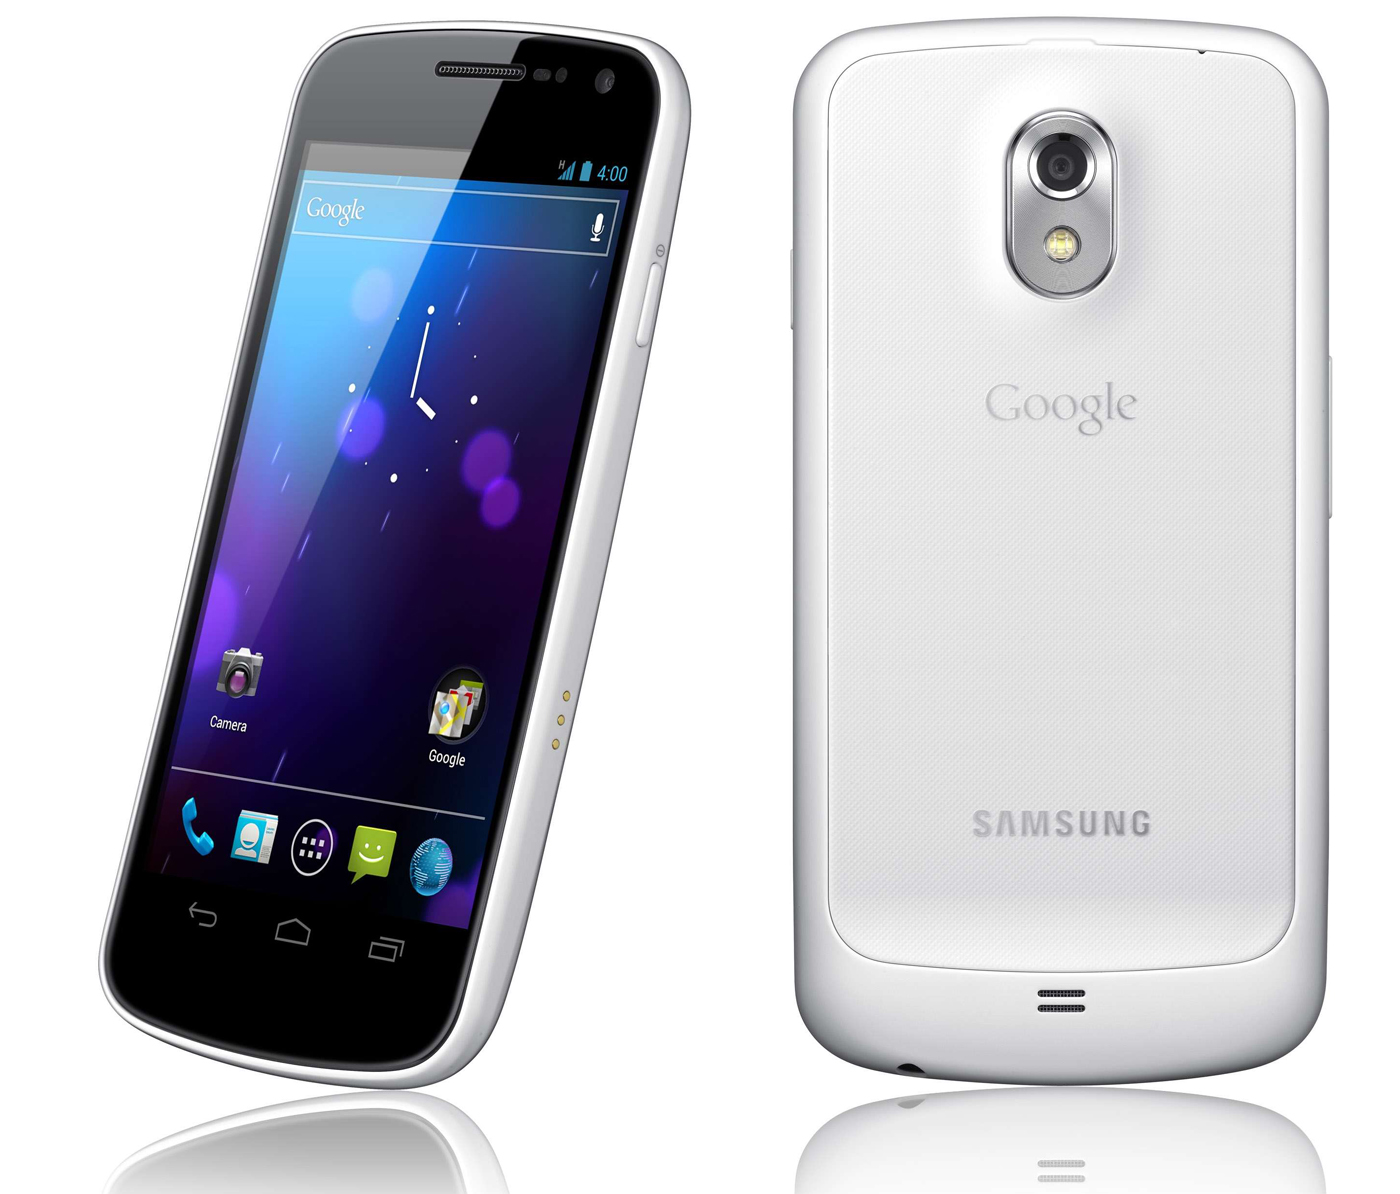 Смартфон SAMSUNG Galaxy A52, 8ГБ/128ГБ, фиолетовый